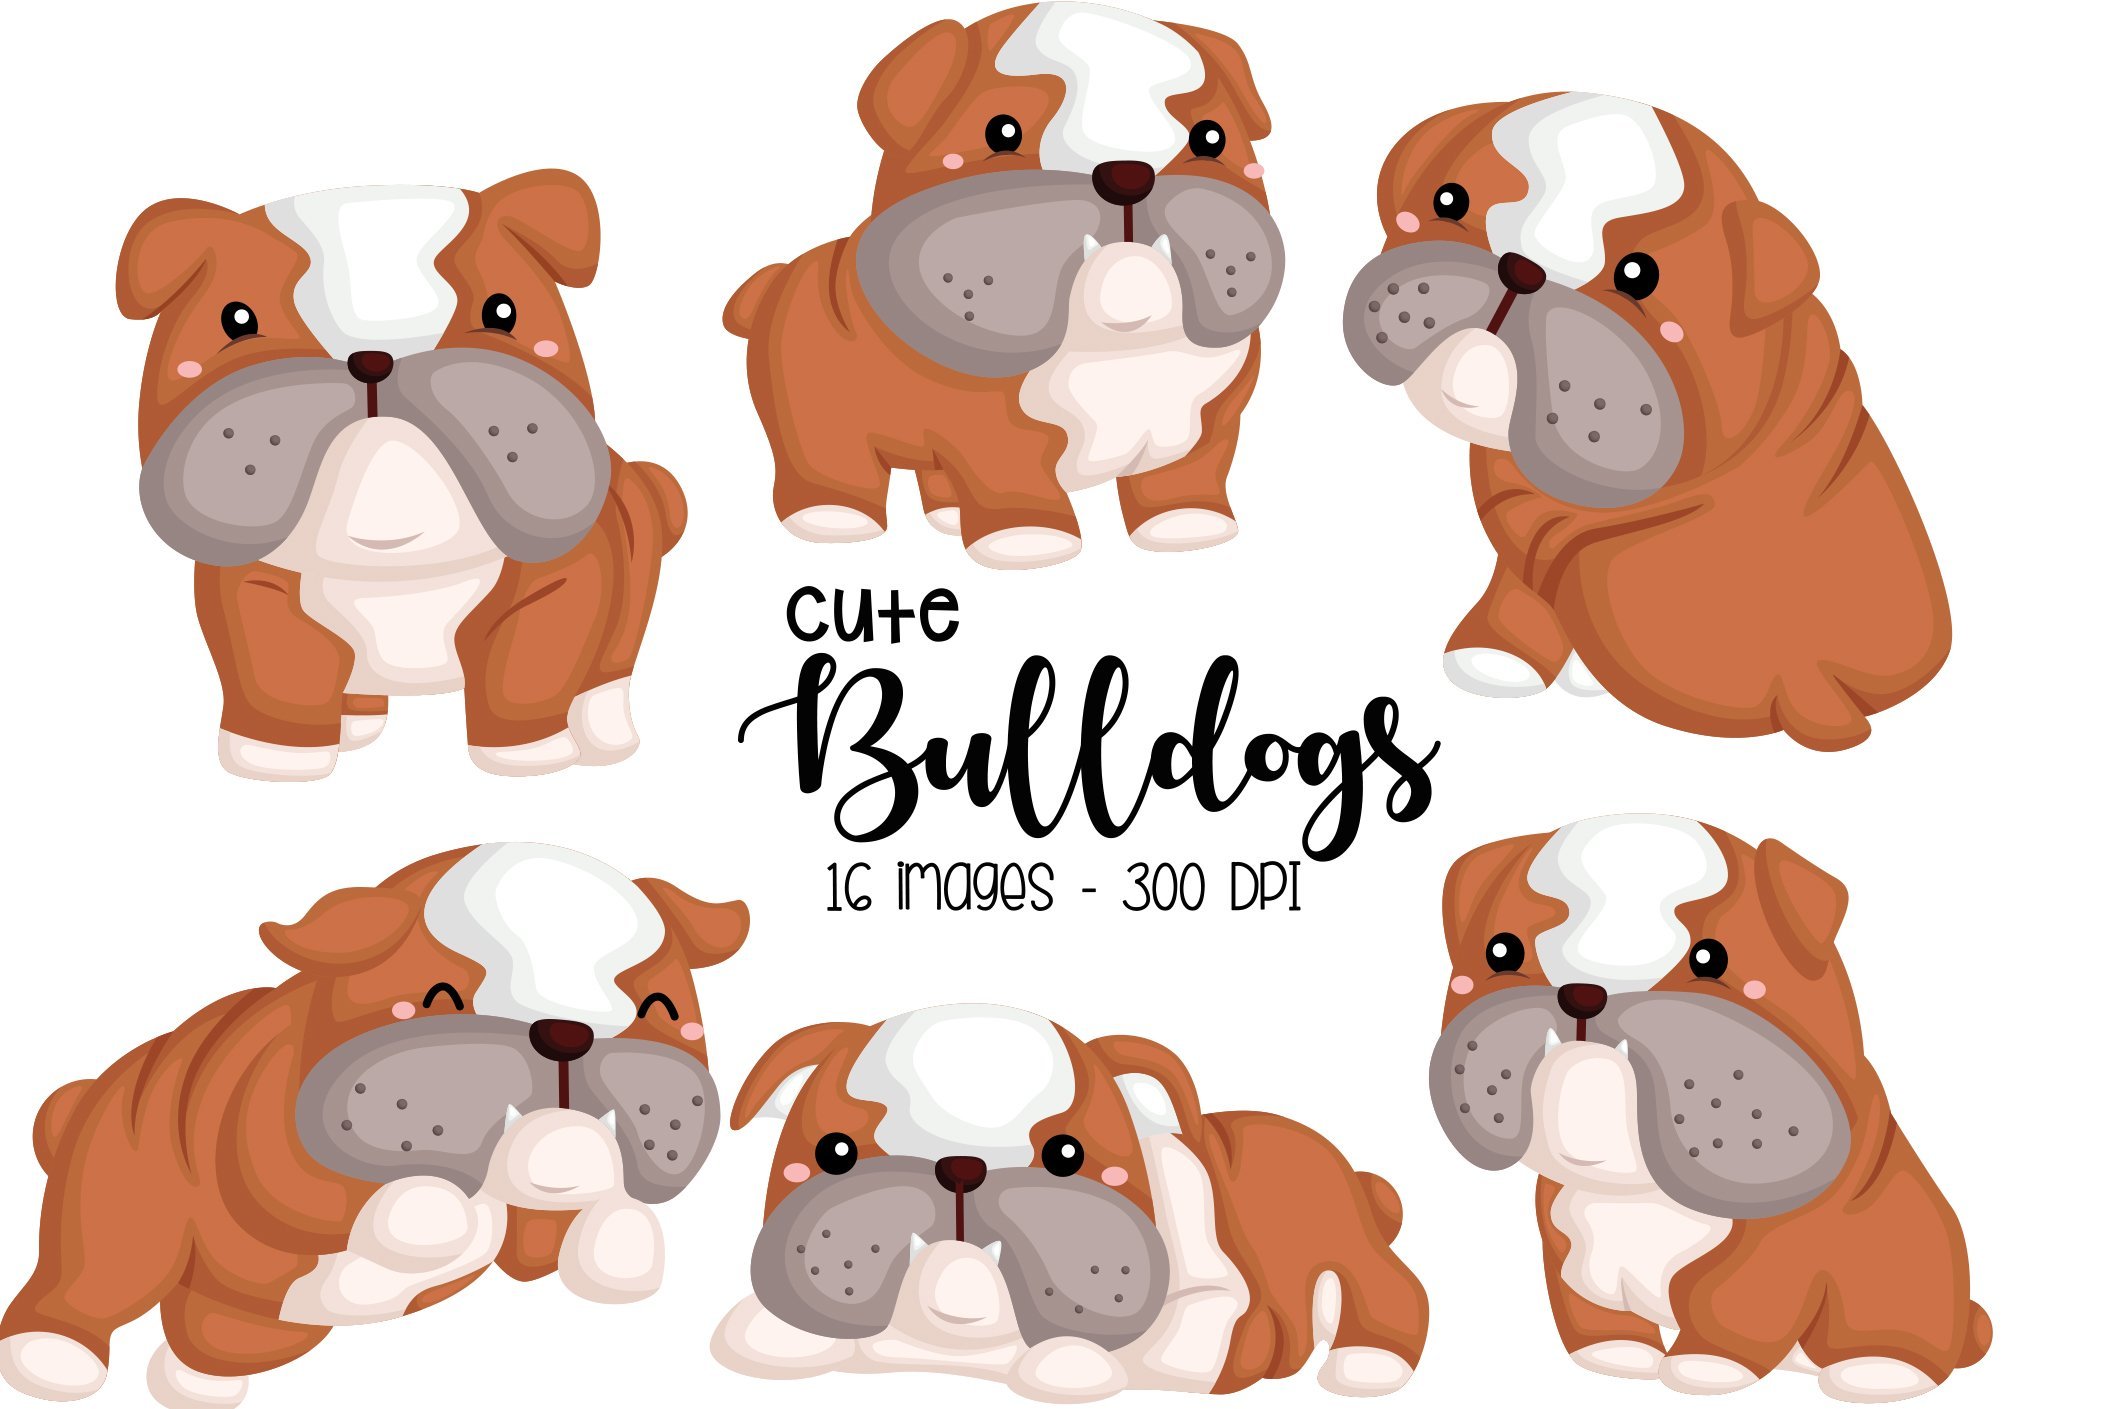 Cute Bulldog Breed Clipart cover image.